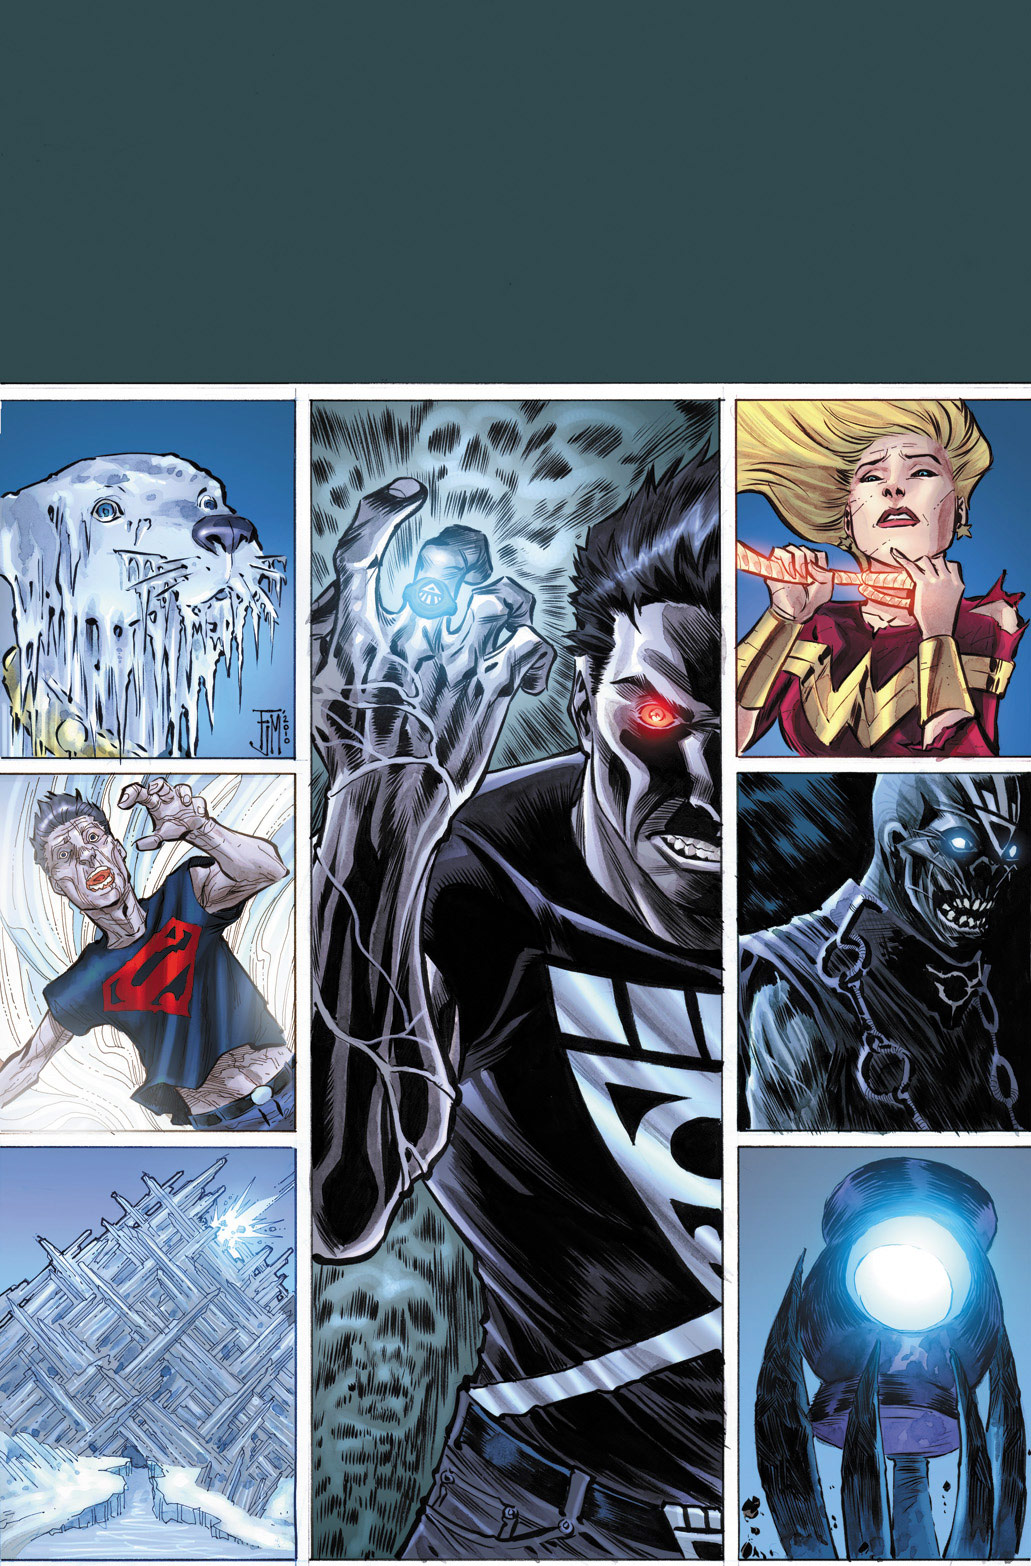 Adventure Comics Starring Black Lantern Superboy #7